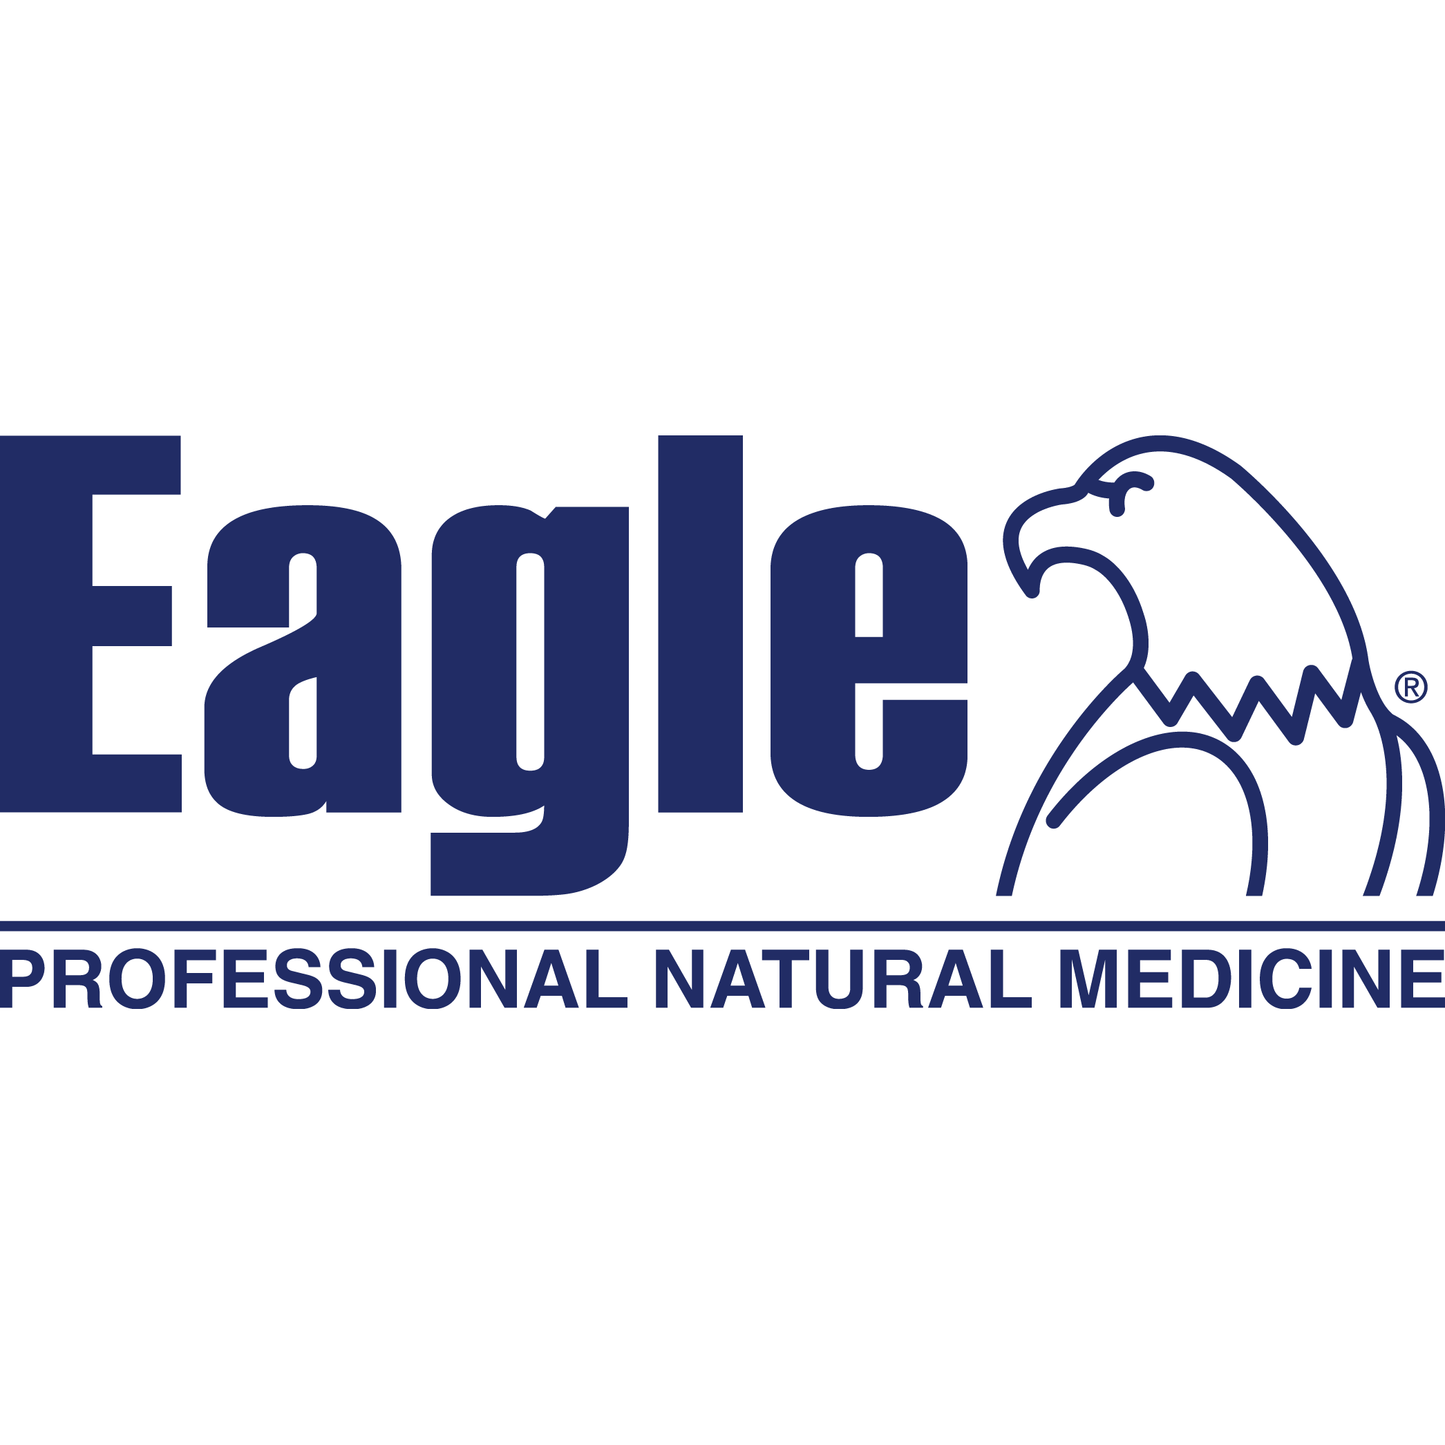 Eagle Bone Matrix Support 90 Tablets